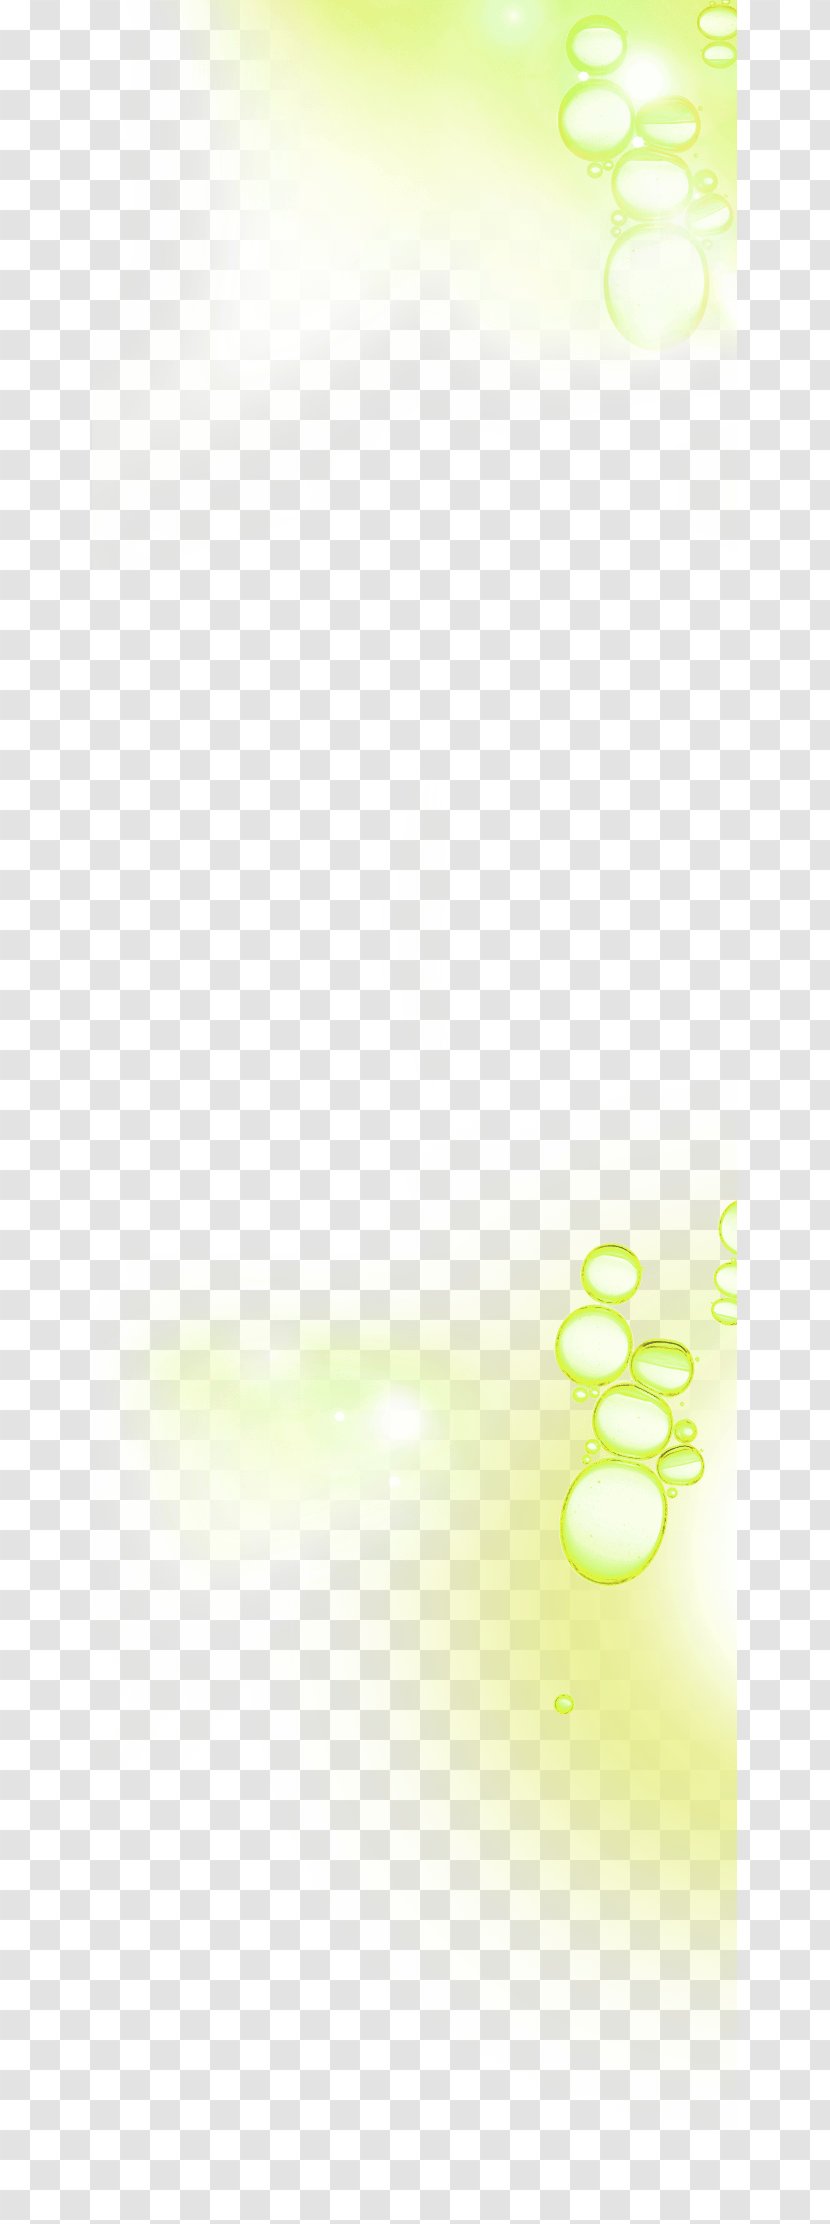 Light Green Drop - Gratis - Fresh Pearls Border Texture Transparent PNG